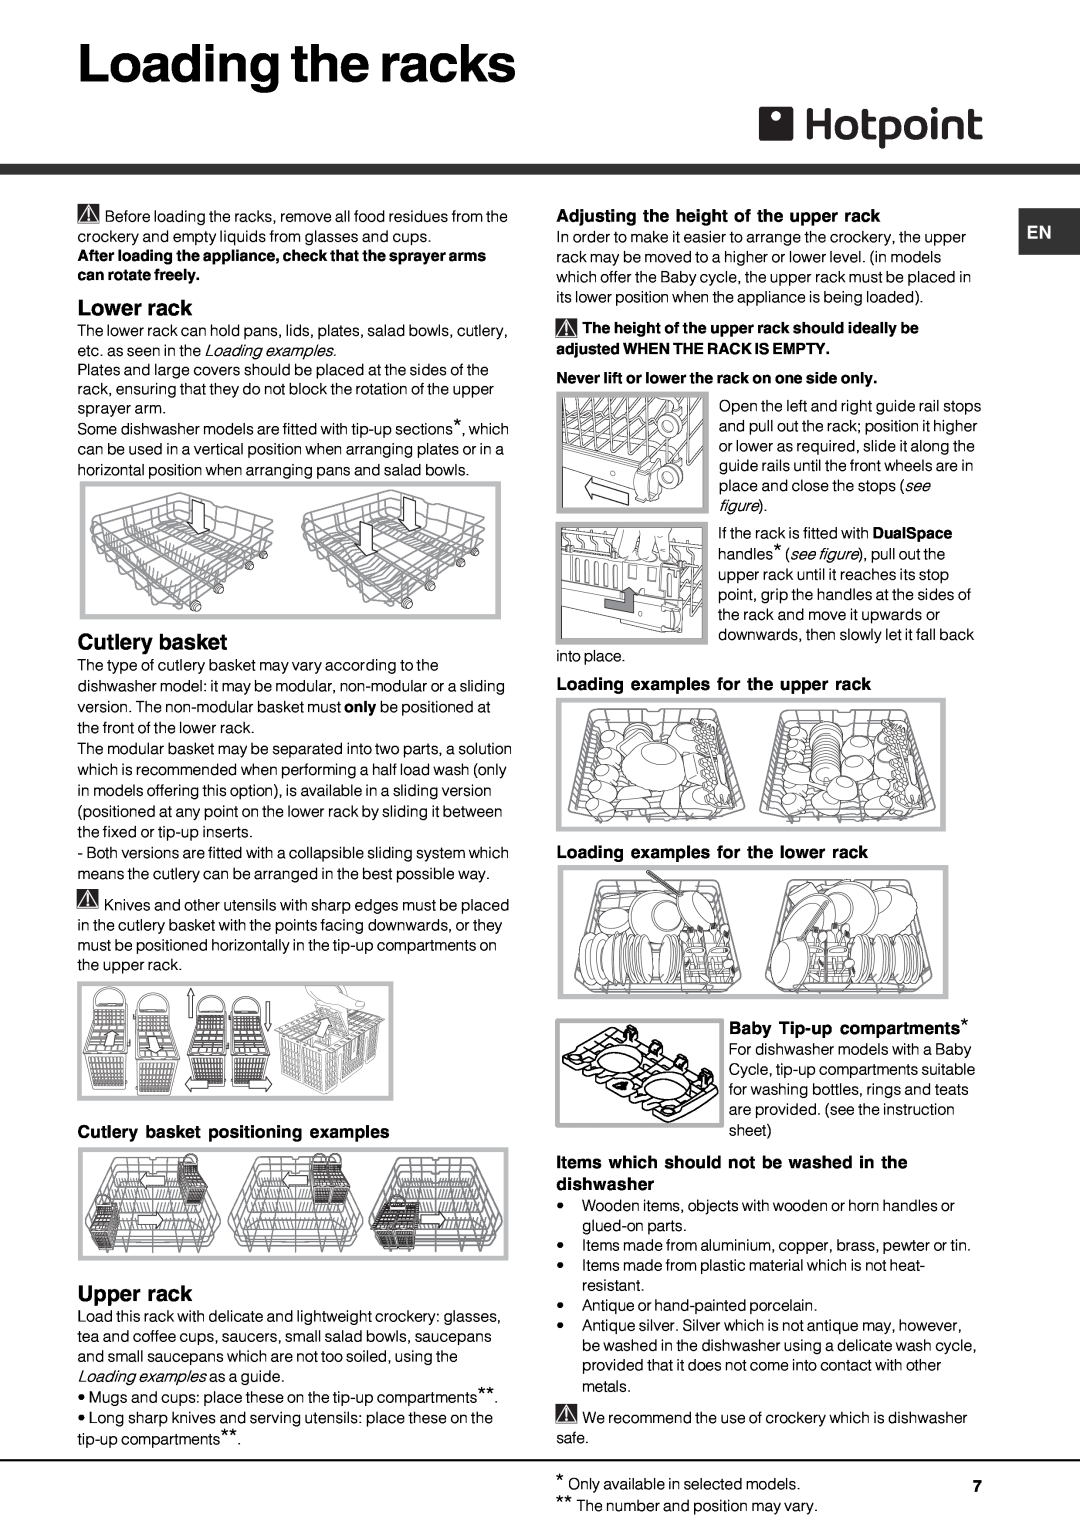 Hotpoint FDD 912 manual Loading the racks, Lower rack, Cutlery basket, Upper rack 